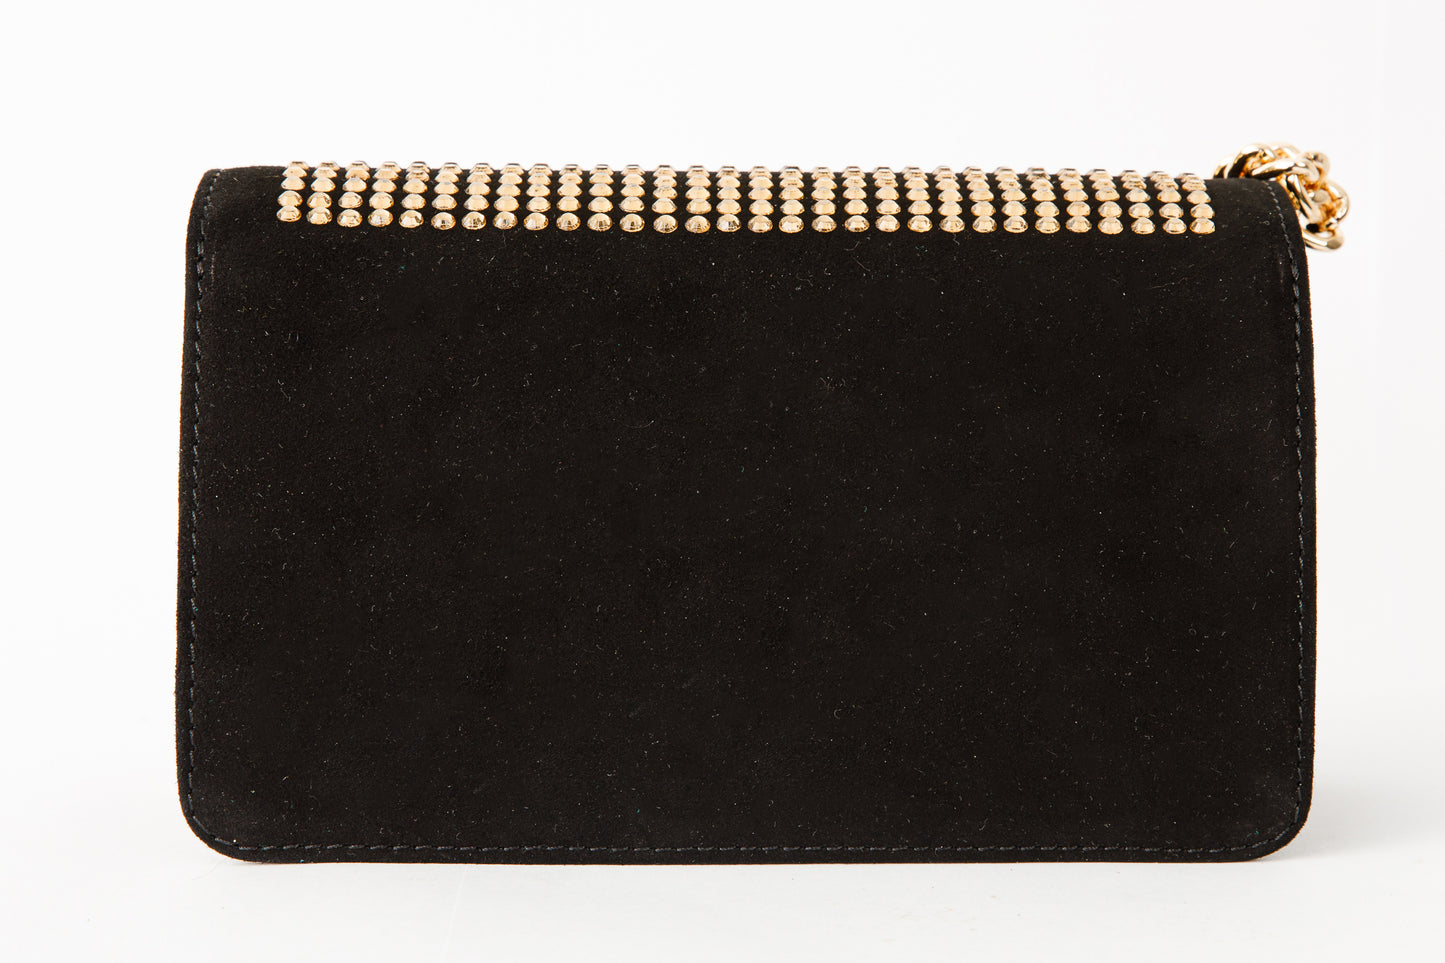 The Ailano Black Glitter Leather Handbag